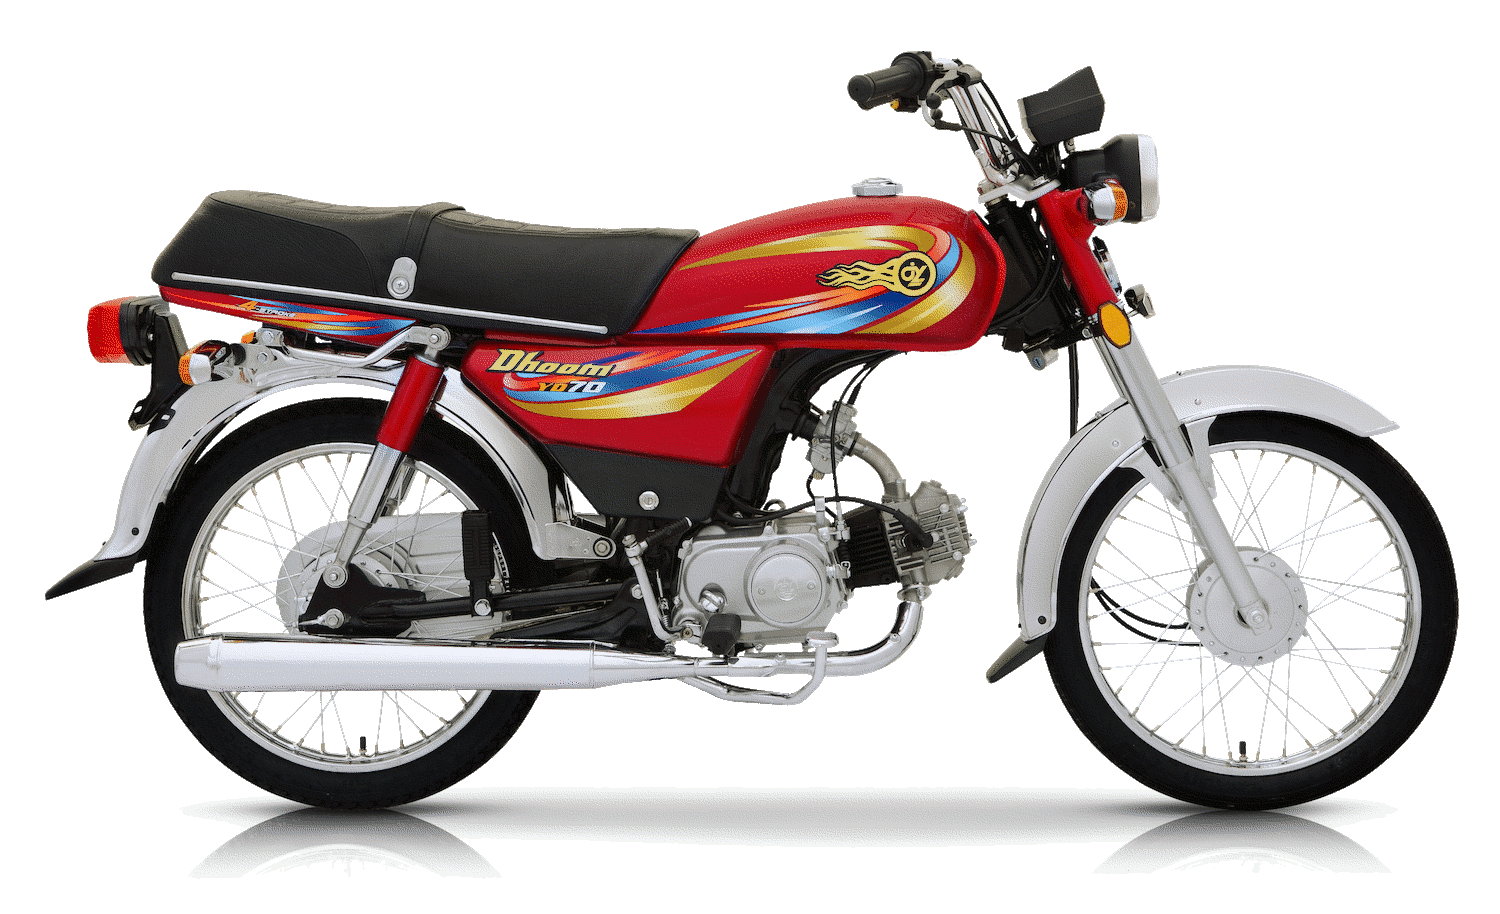 Yamaha Bikes Prices In Pakistan 2020 New Model